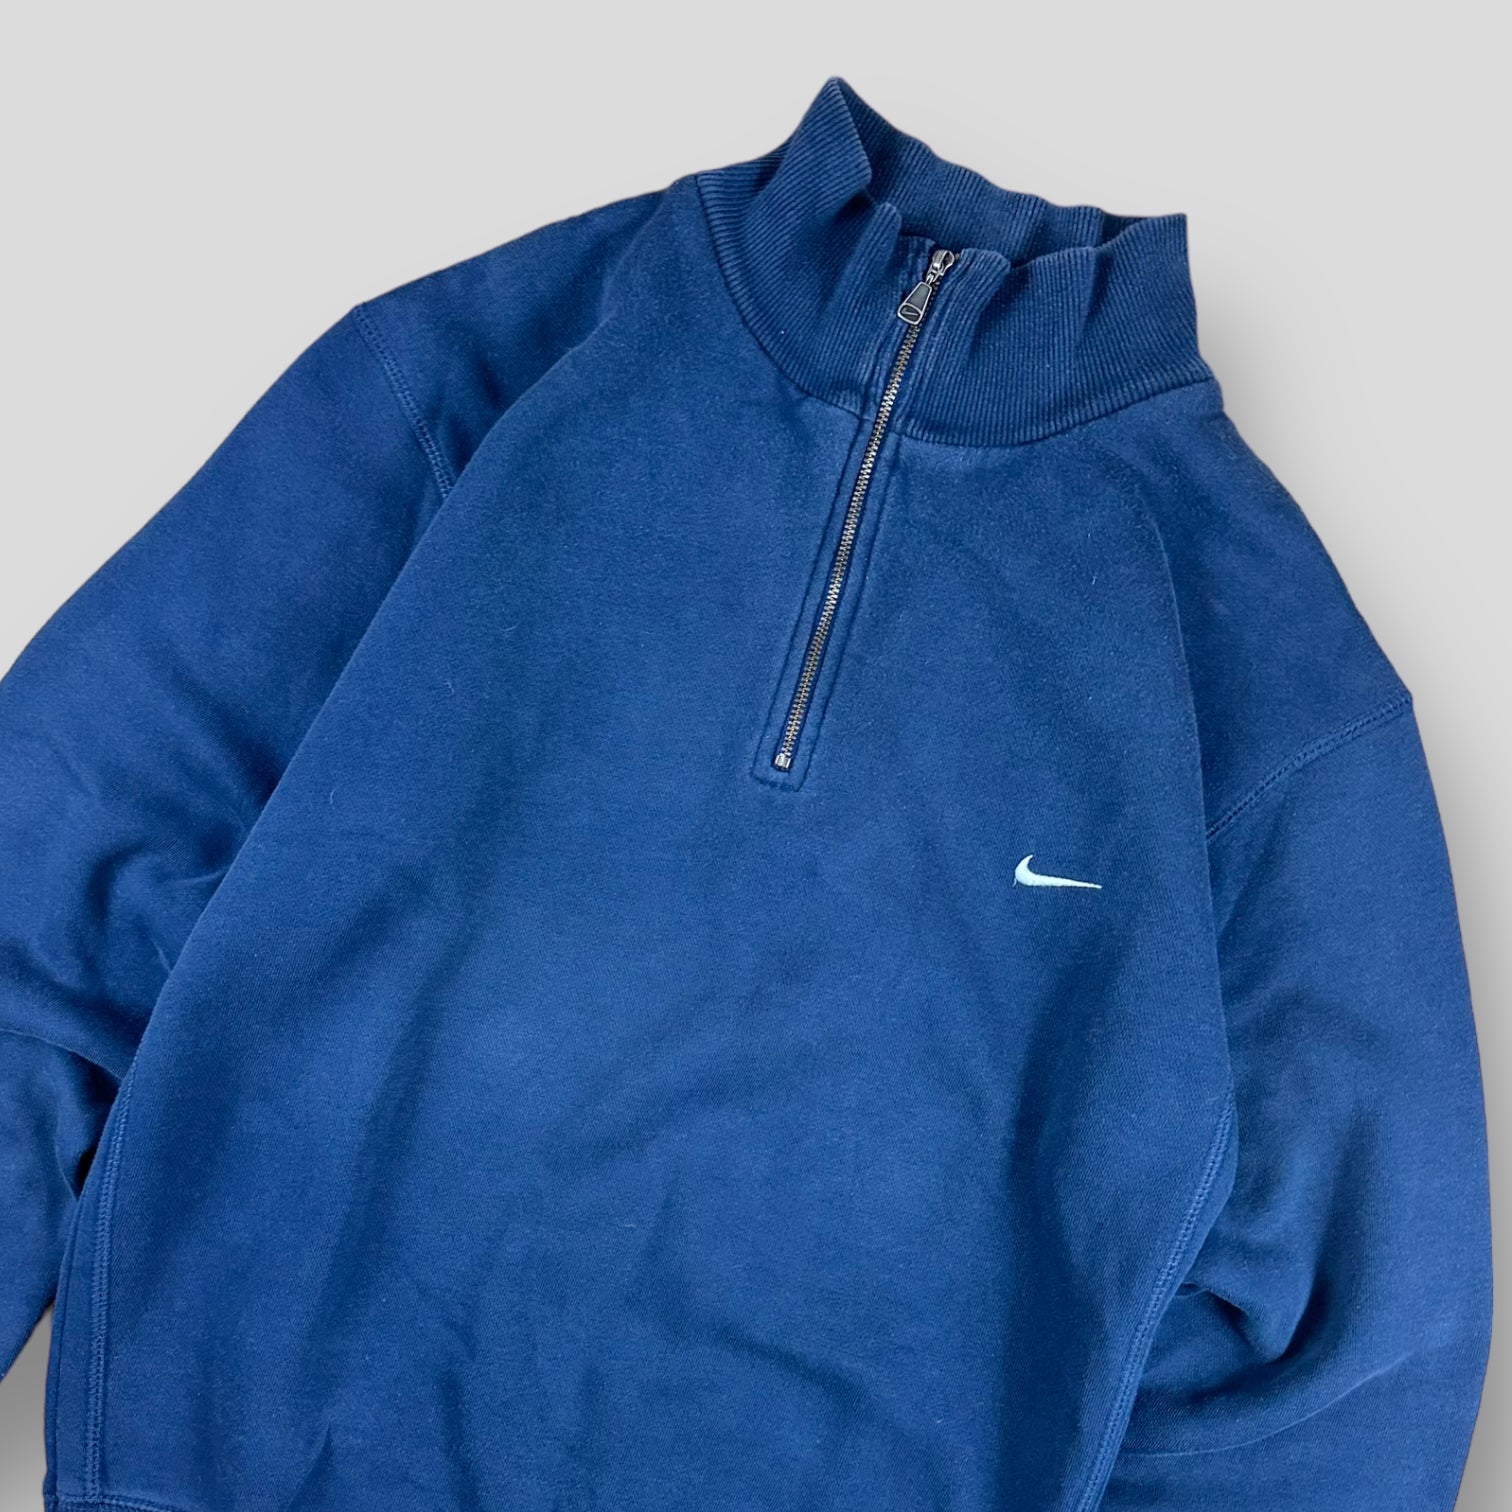 Nike quarter zip sweater